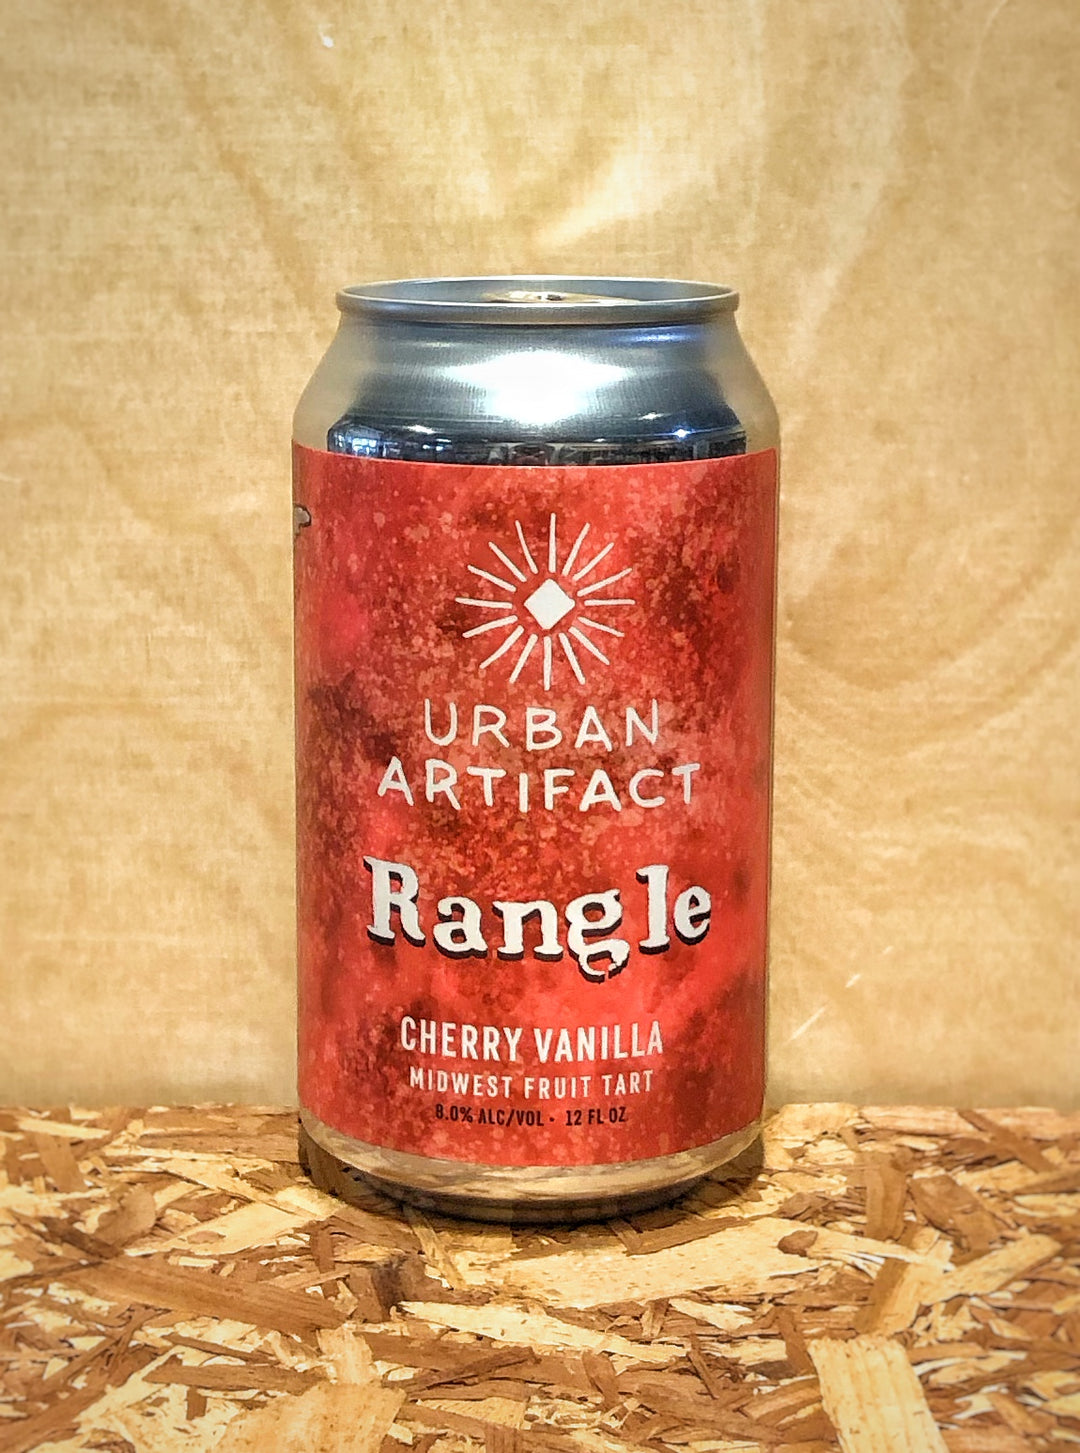 Urban Artifact 'Rangle' Cherry Vanilla Midwest Fruit Tart (Cincinnati, OH)